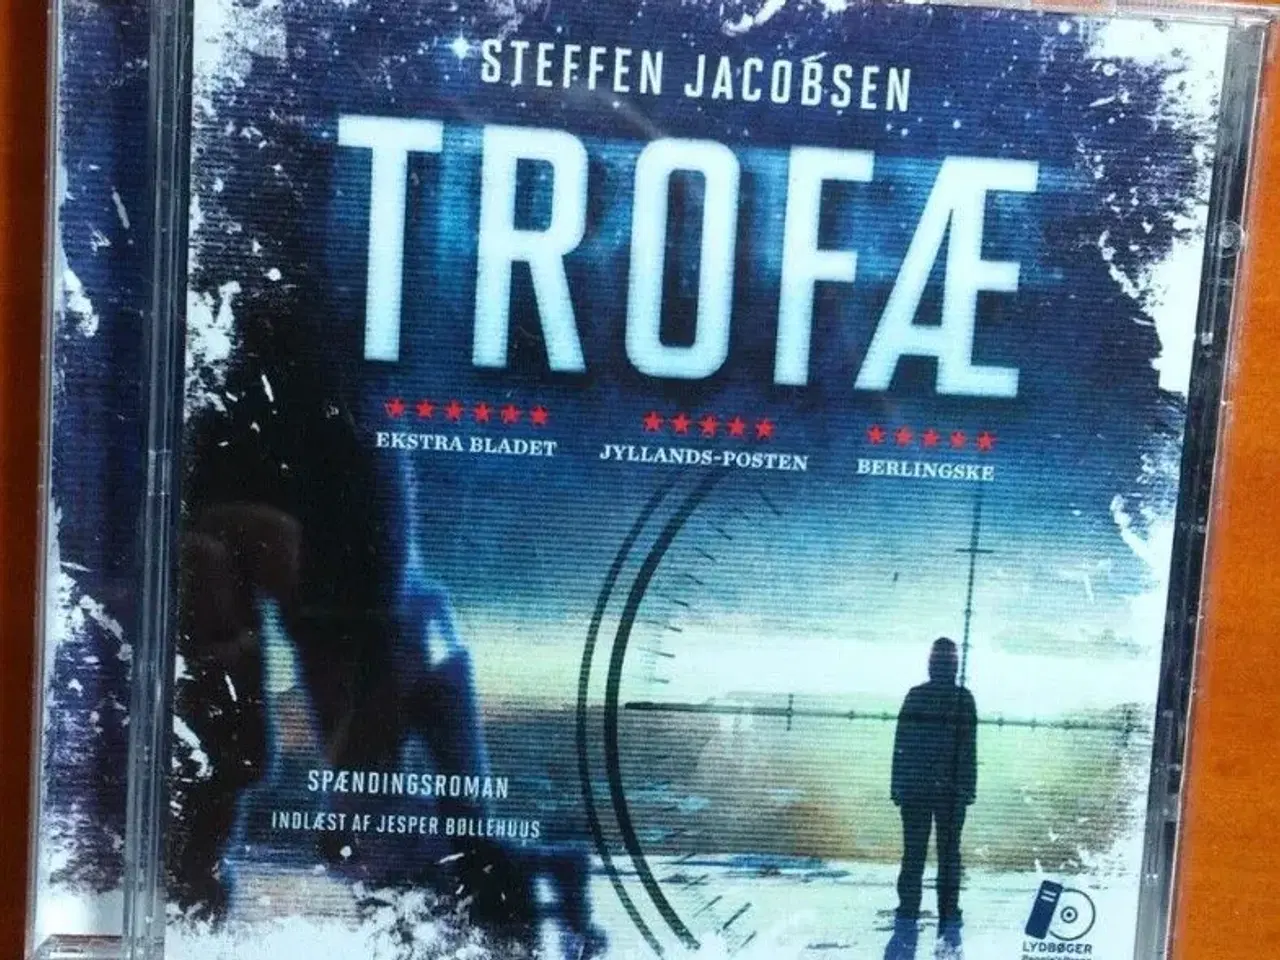 Billede 1 - Trofæ Steffen Jacobsen lydbog CD